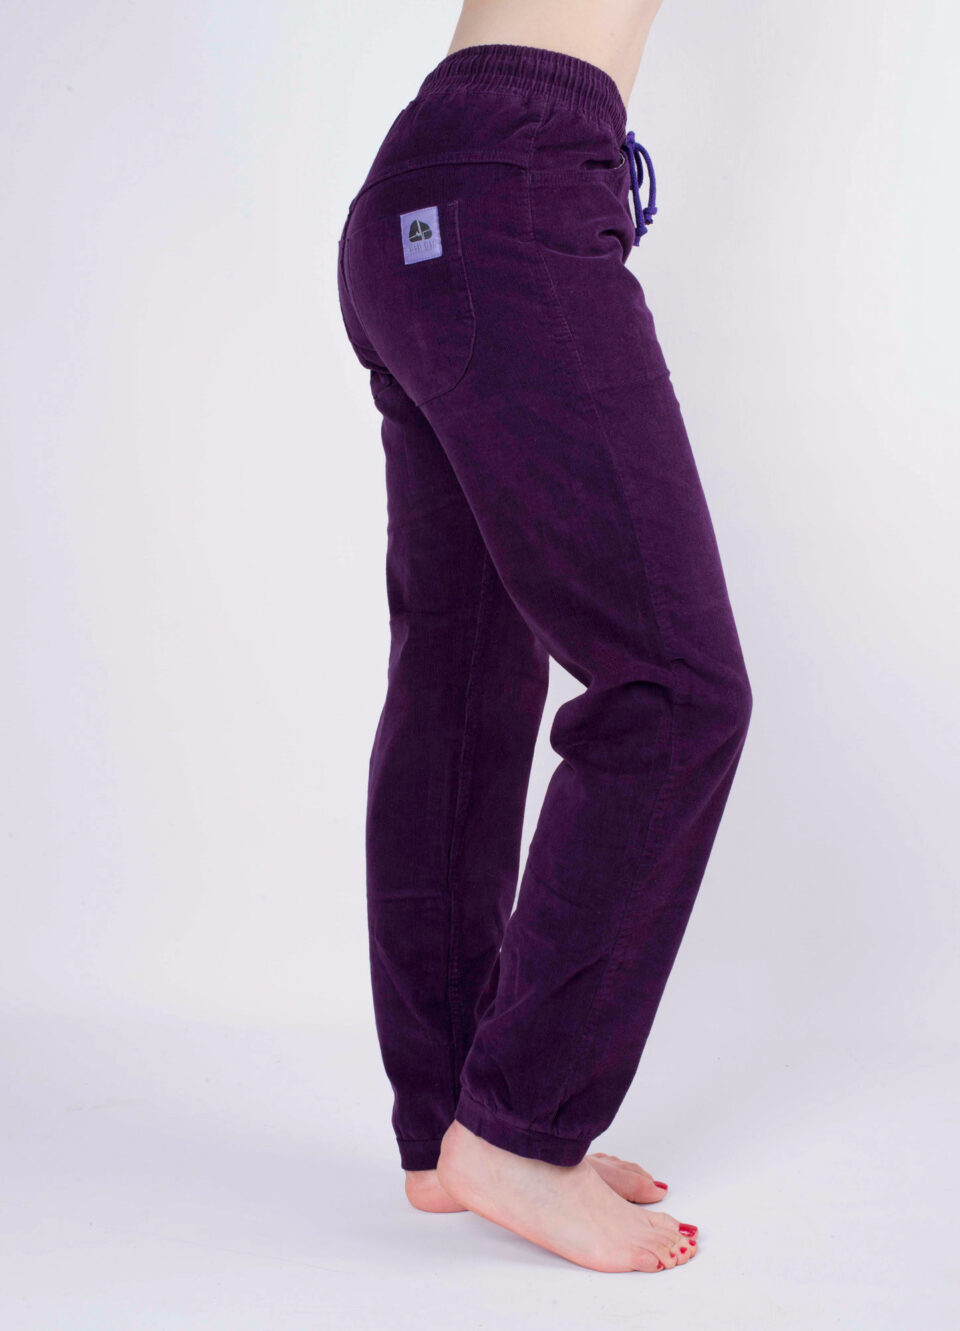 Rocket Pocket corduroy pants - purple